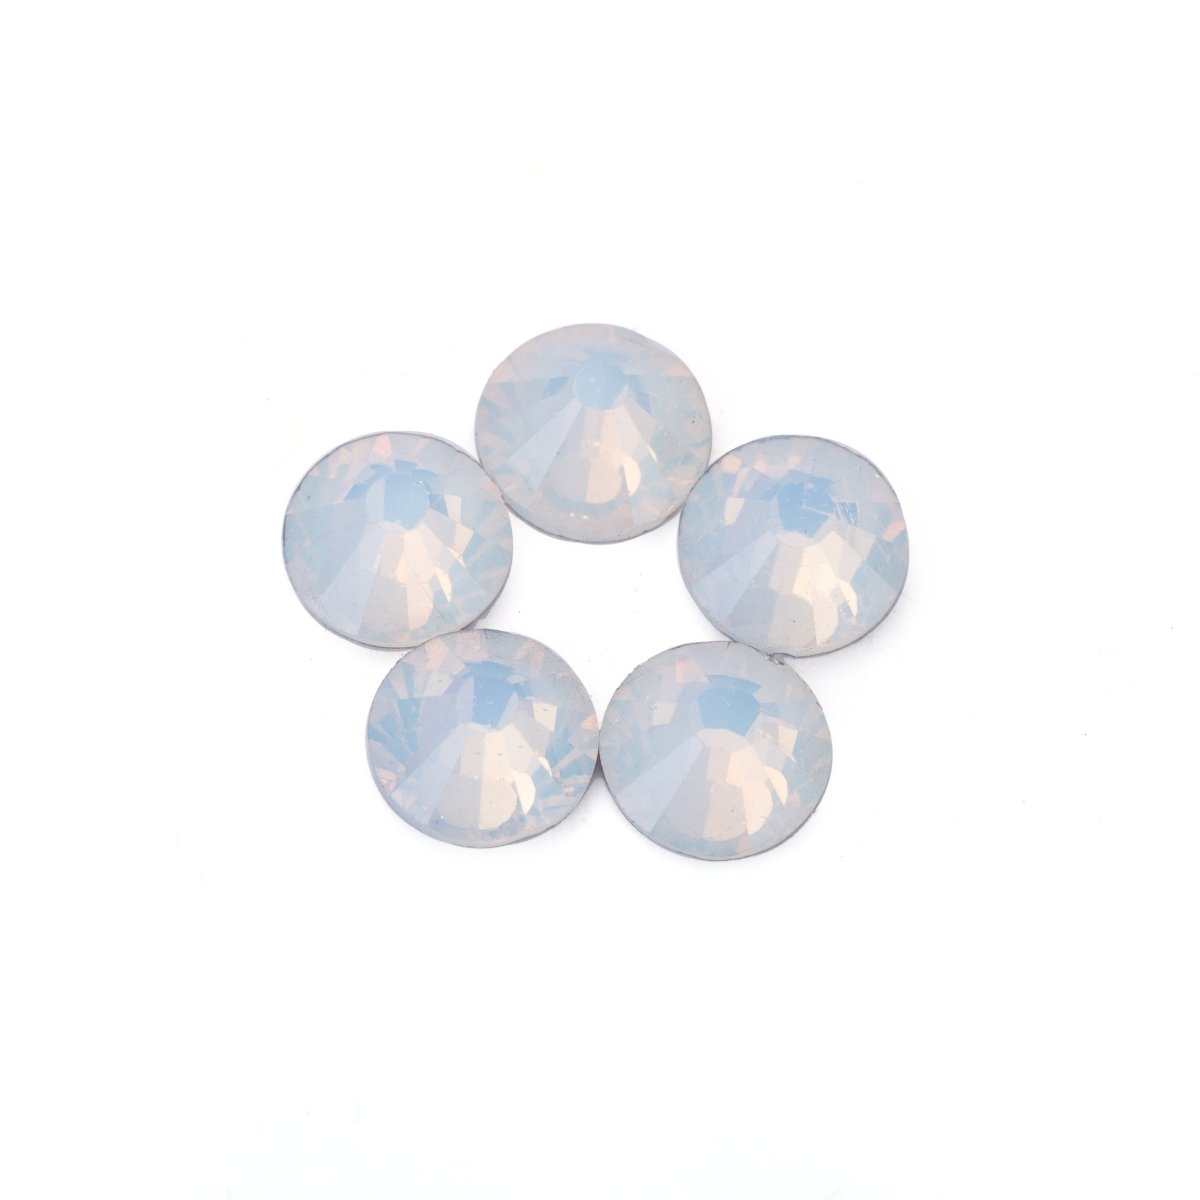 70 pcs Crystal Cream White / White Opal #234 - DLUXCA